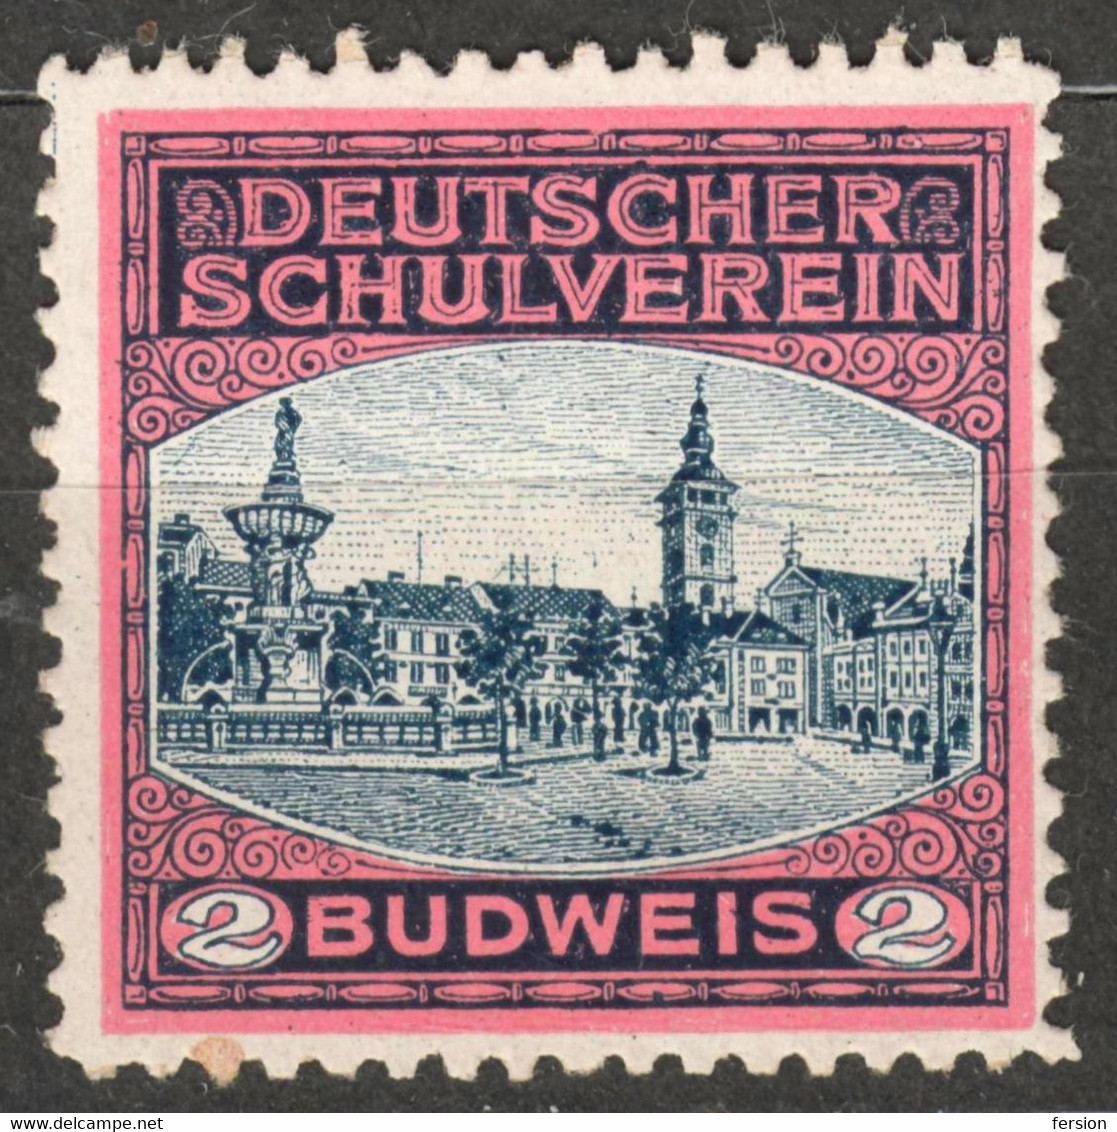 České Budějovice Budweis FOUNTAIN Czechia Bohemia Germany Austria Label Cinderella Vignette SCHOOL Deutscher Schulverein - ...-1918 Prefilatelia